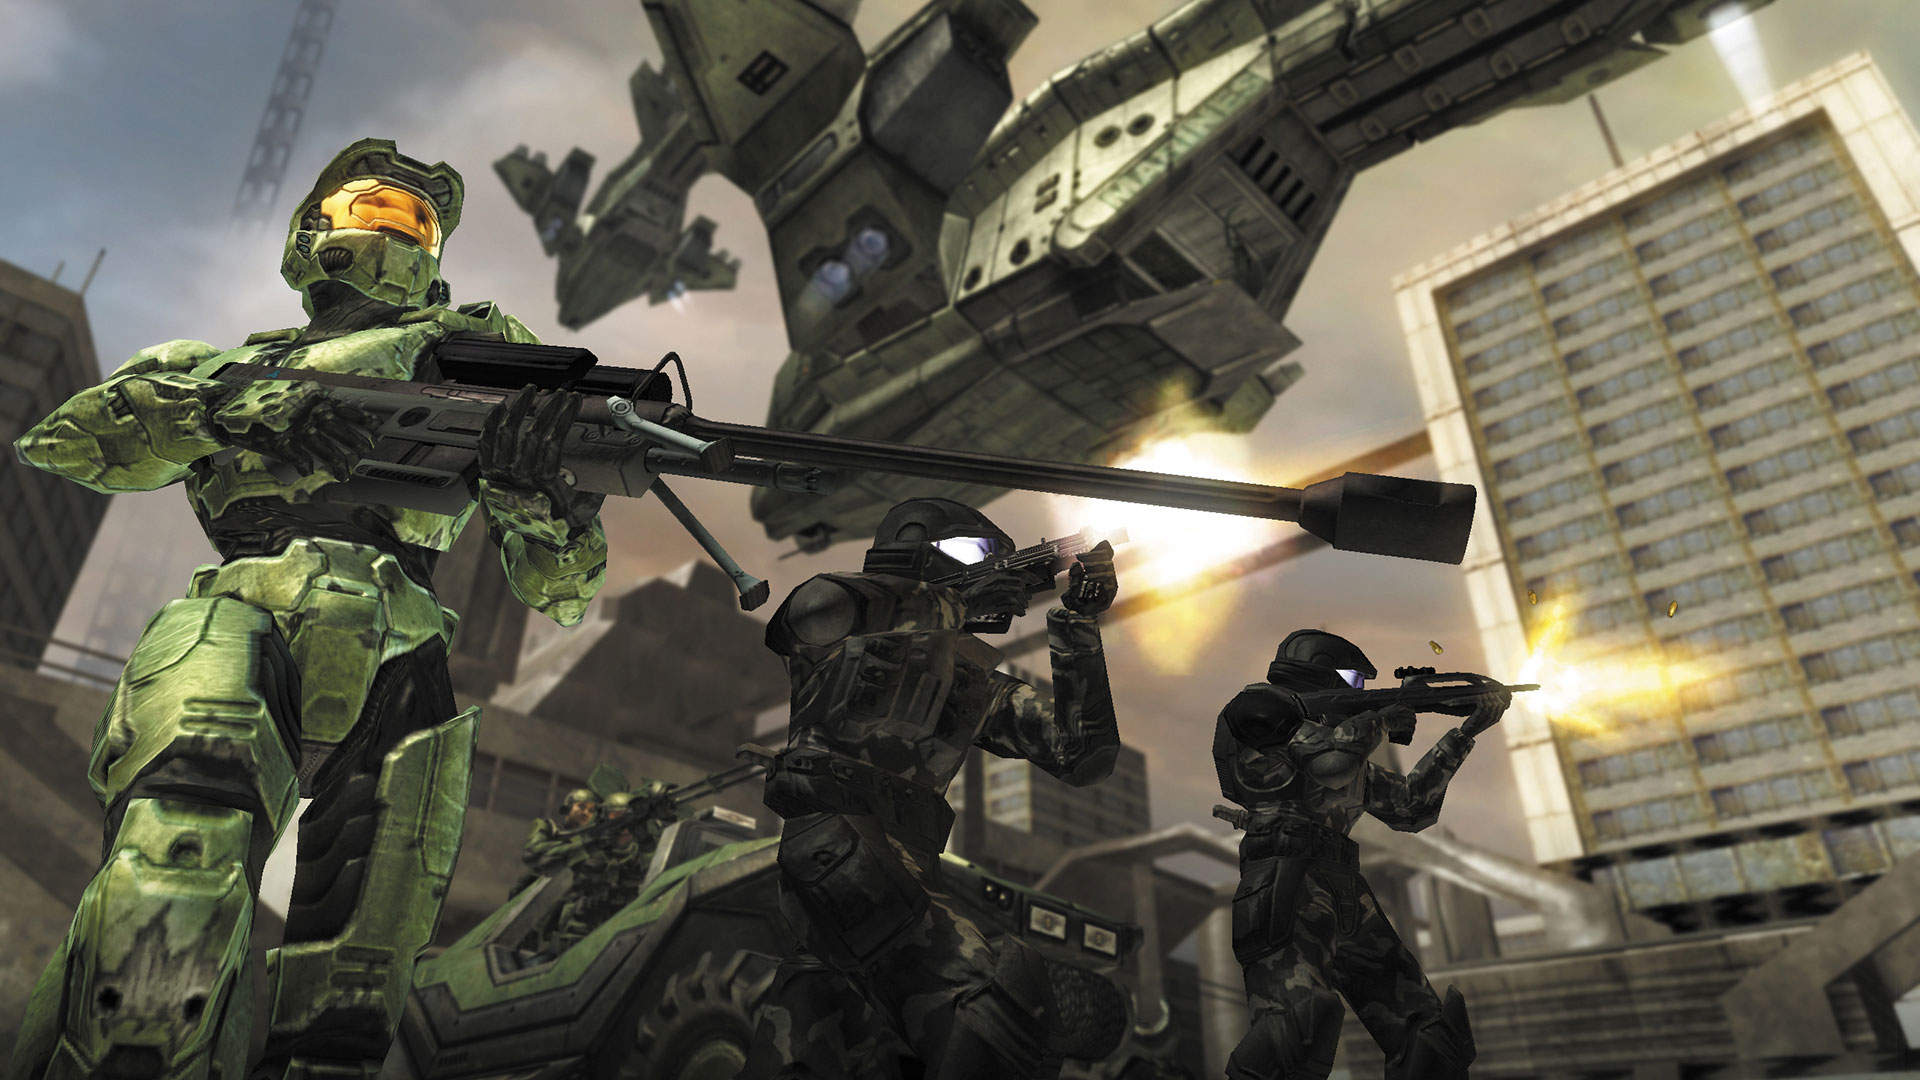 Gambar promosi Halo 2 dengan Master Chief